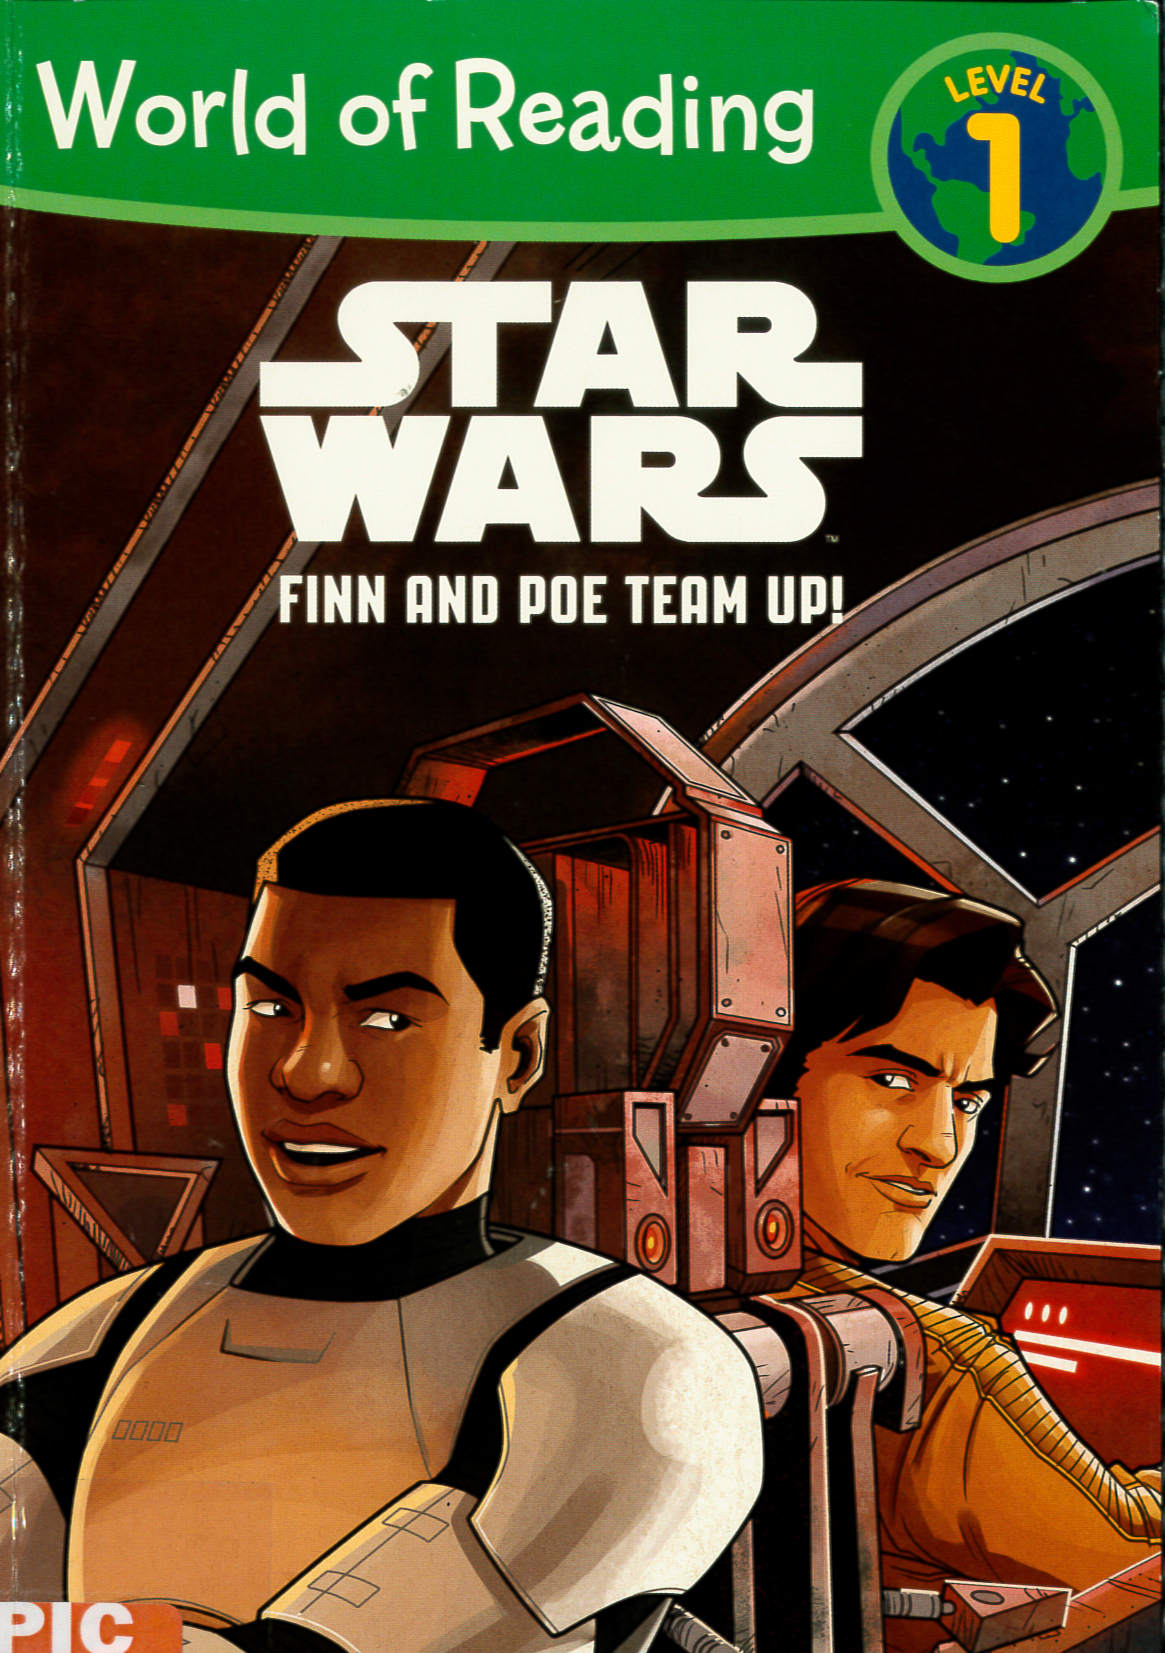 Finn and Poe team up! /